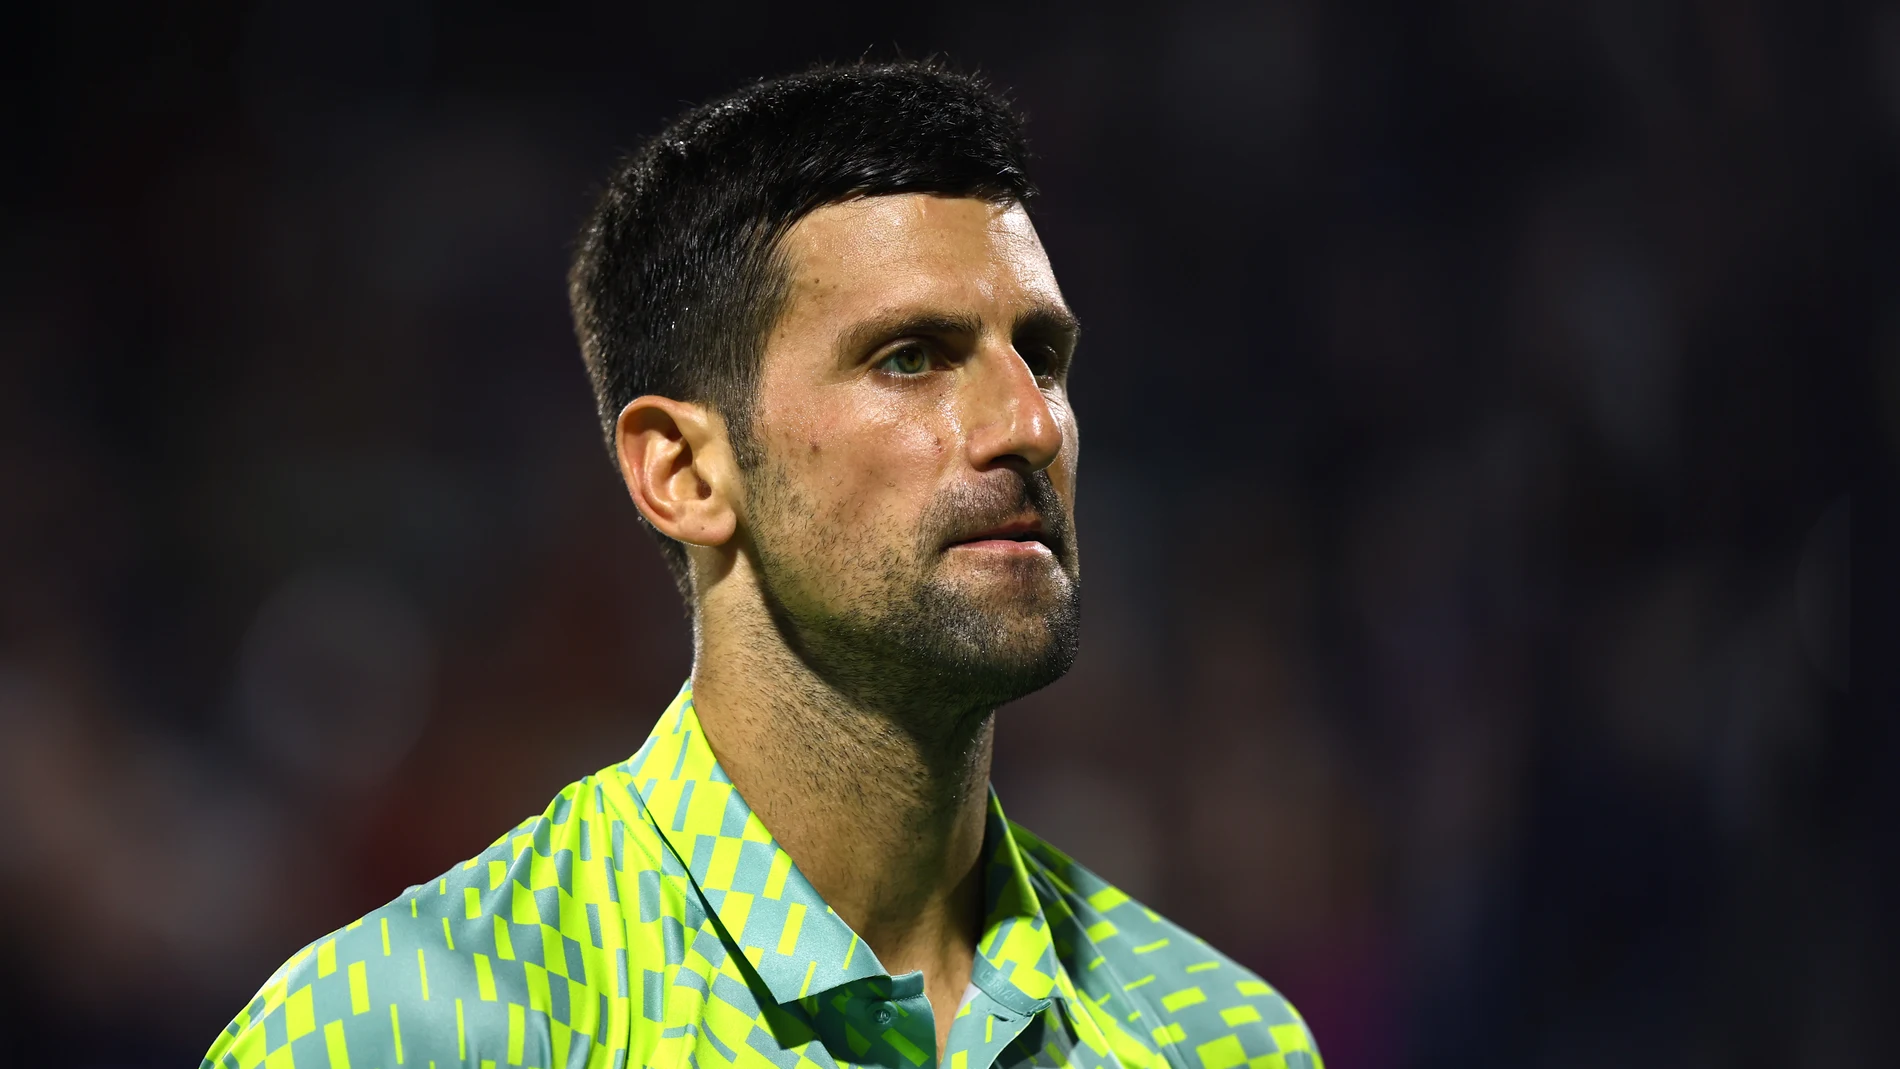 Novak Djokovic en el torneo de Dubái 2023